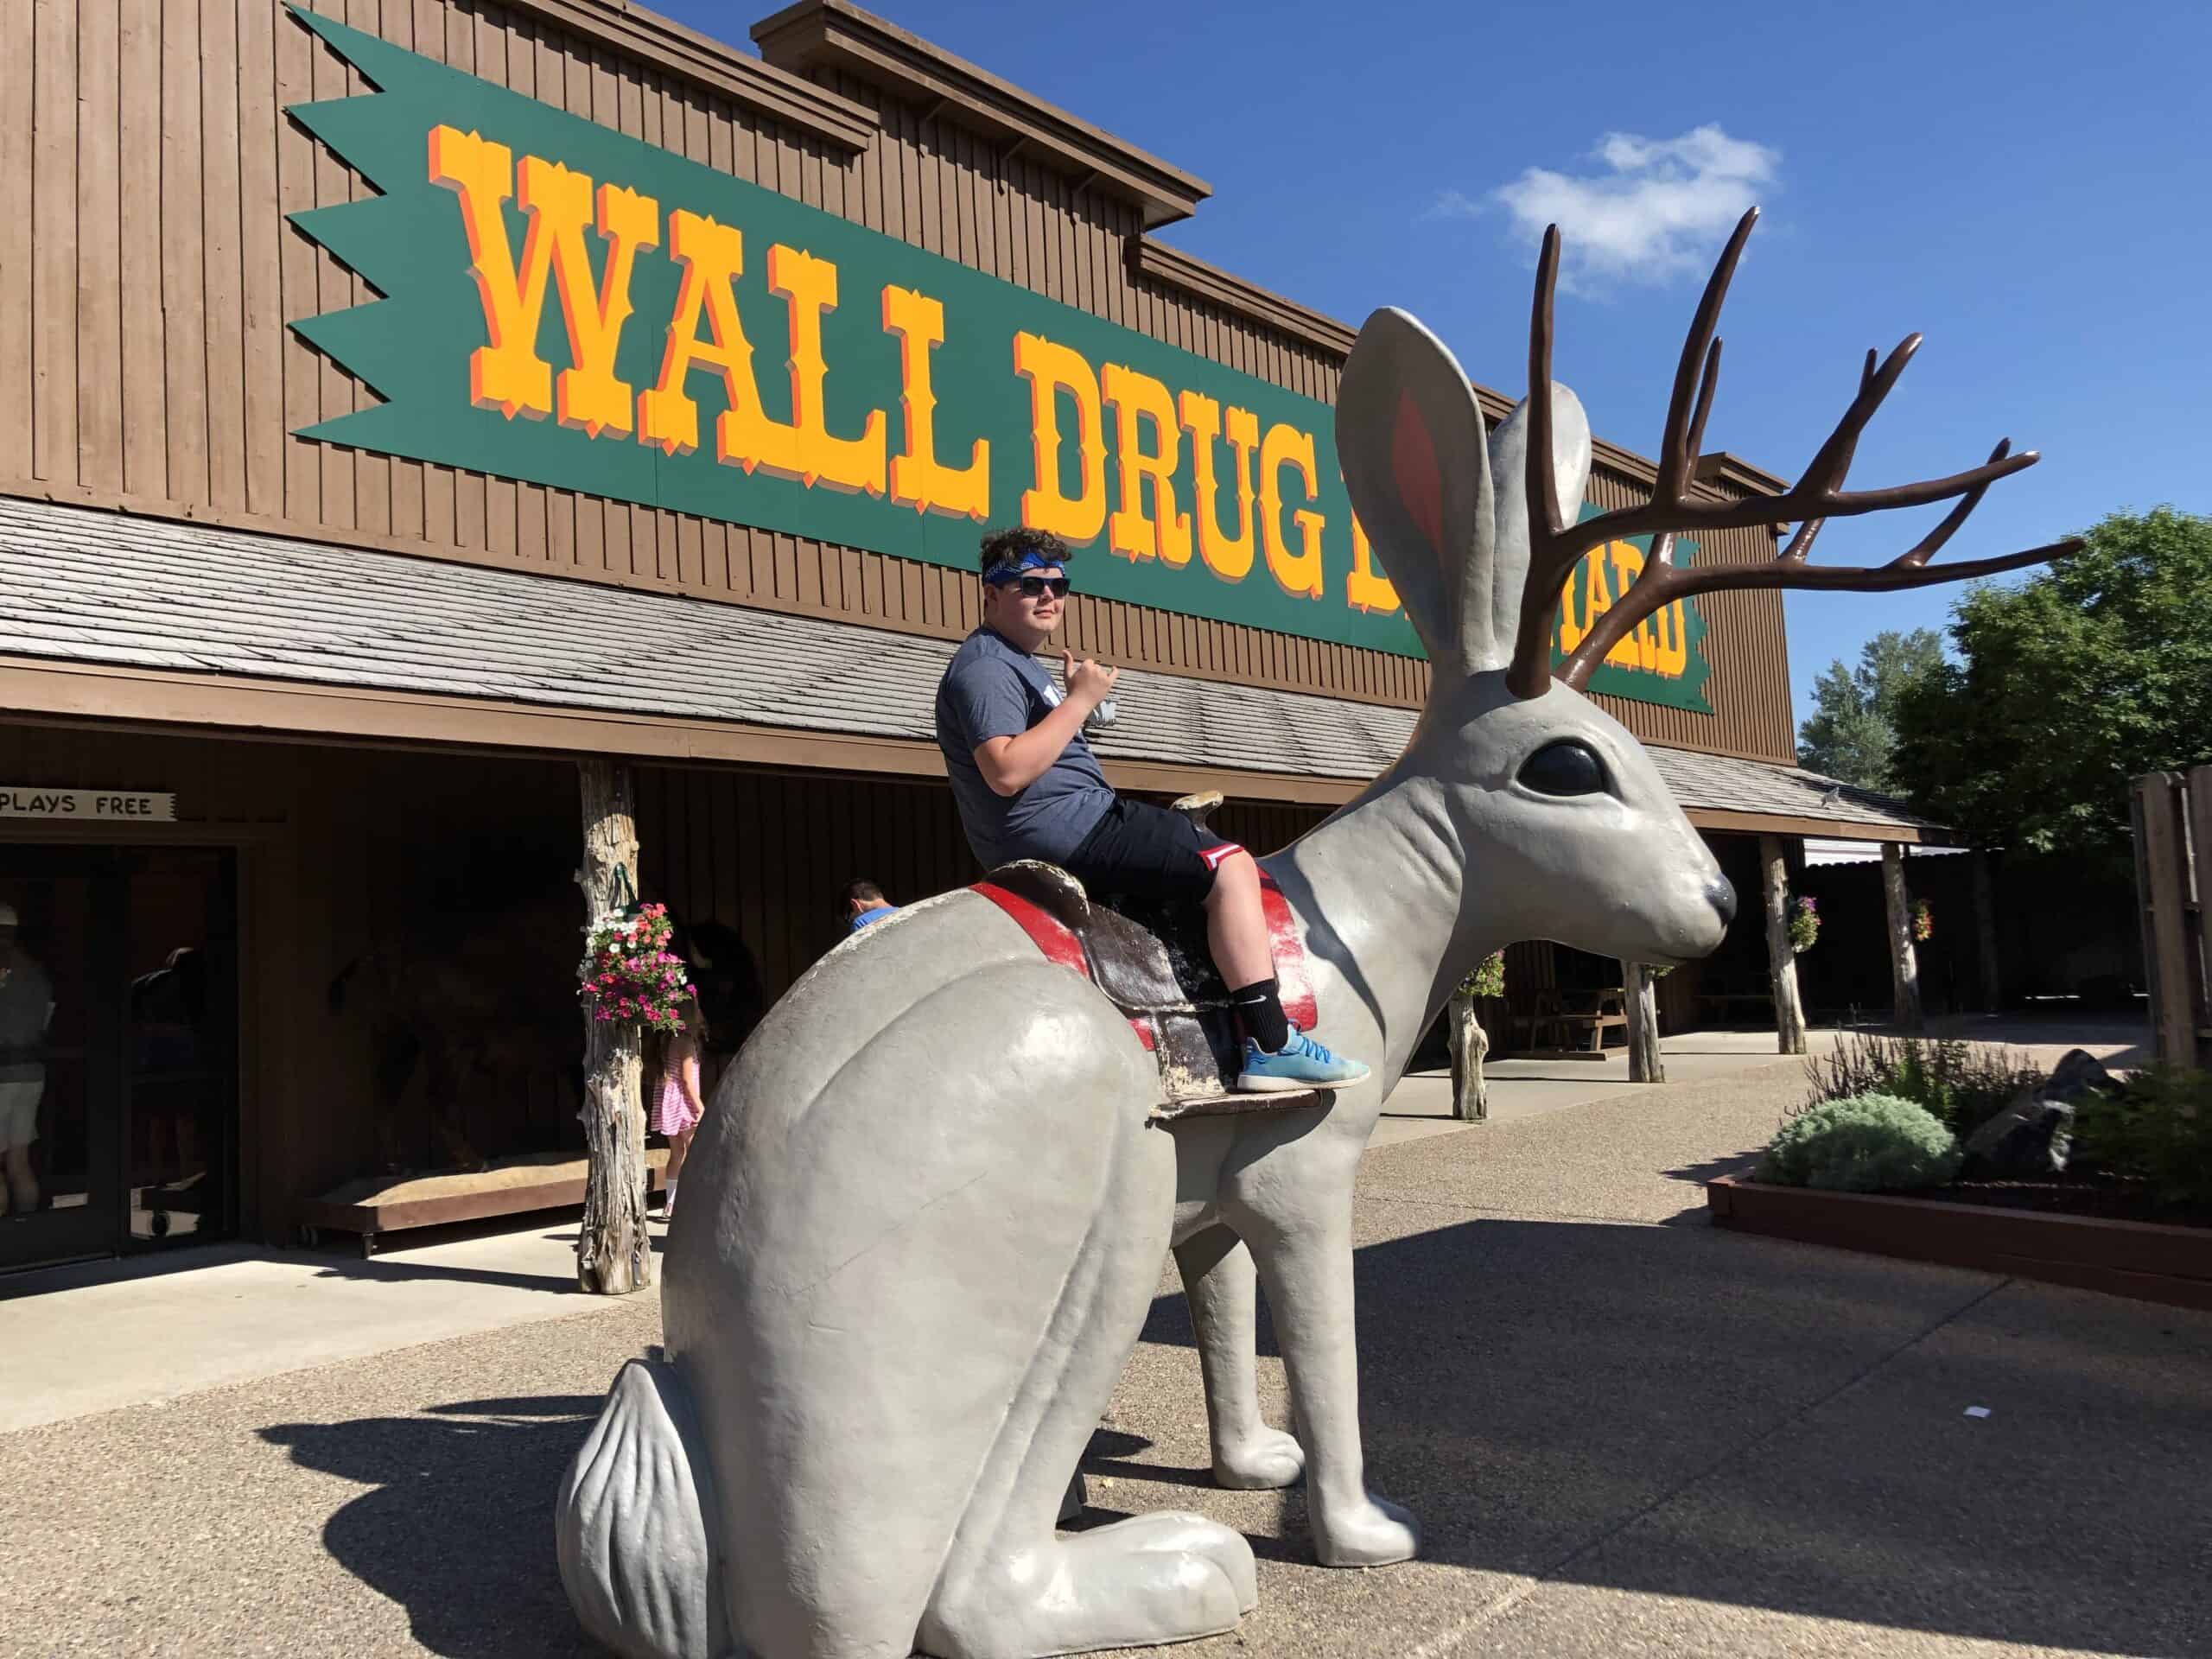 Wall Drug, South Dakota